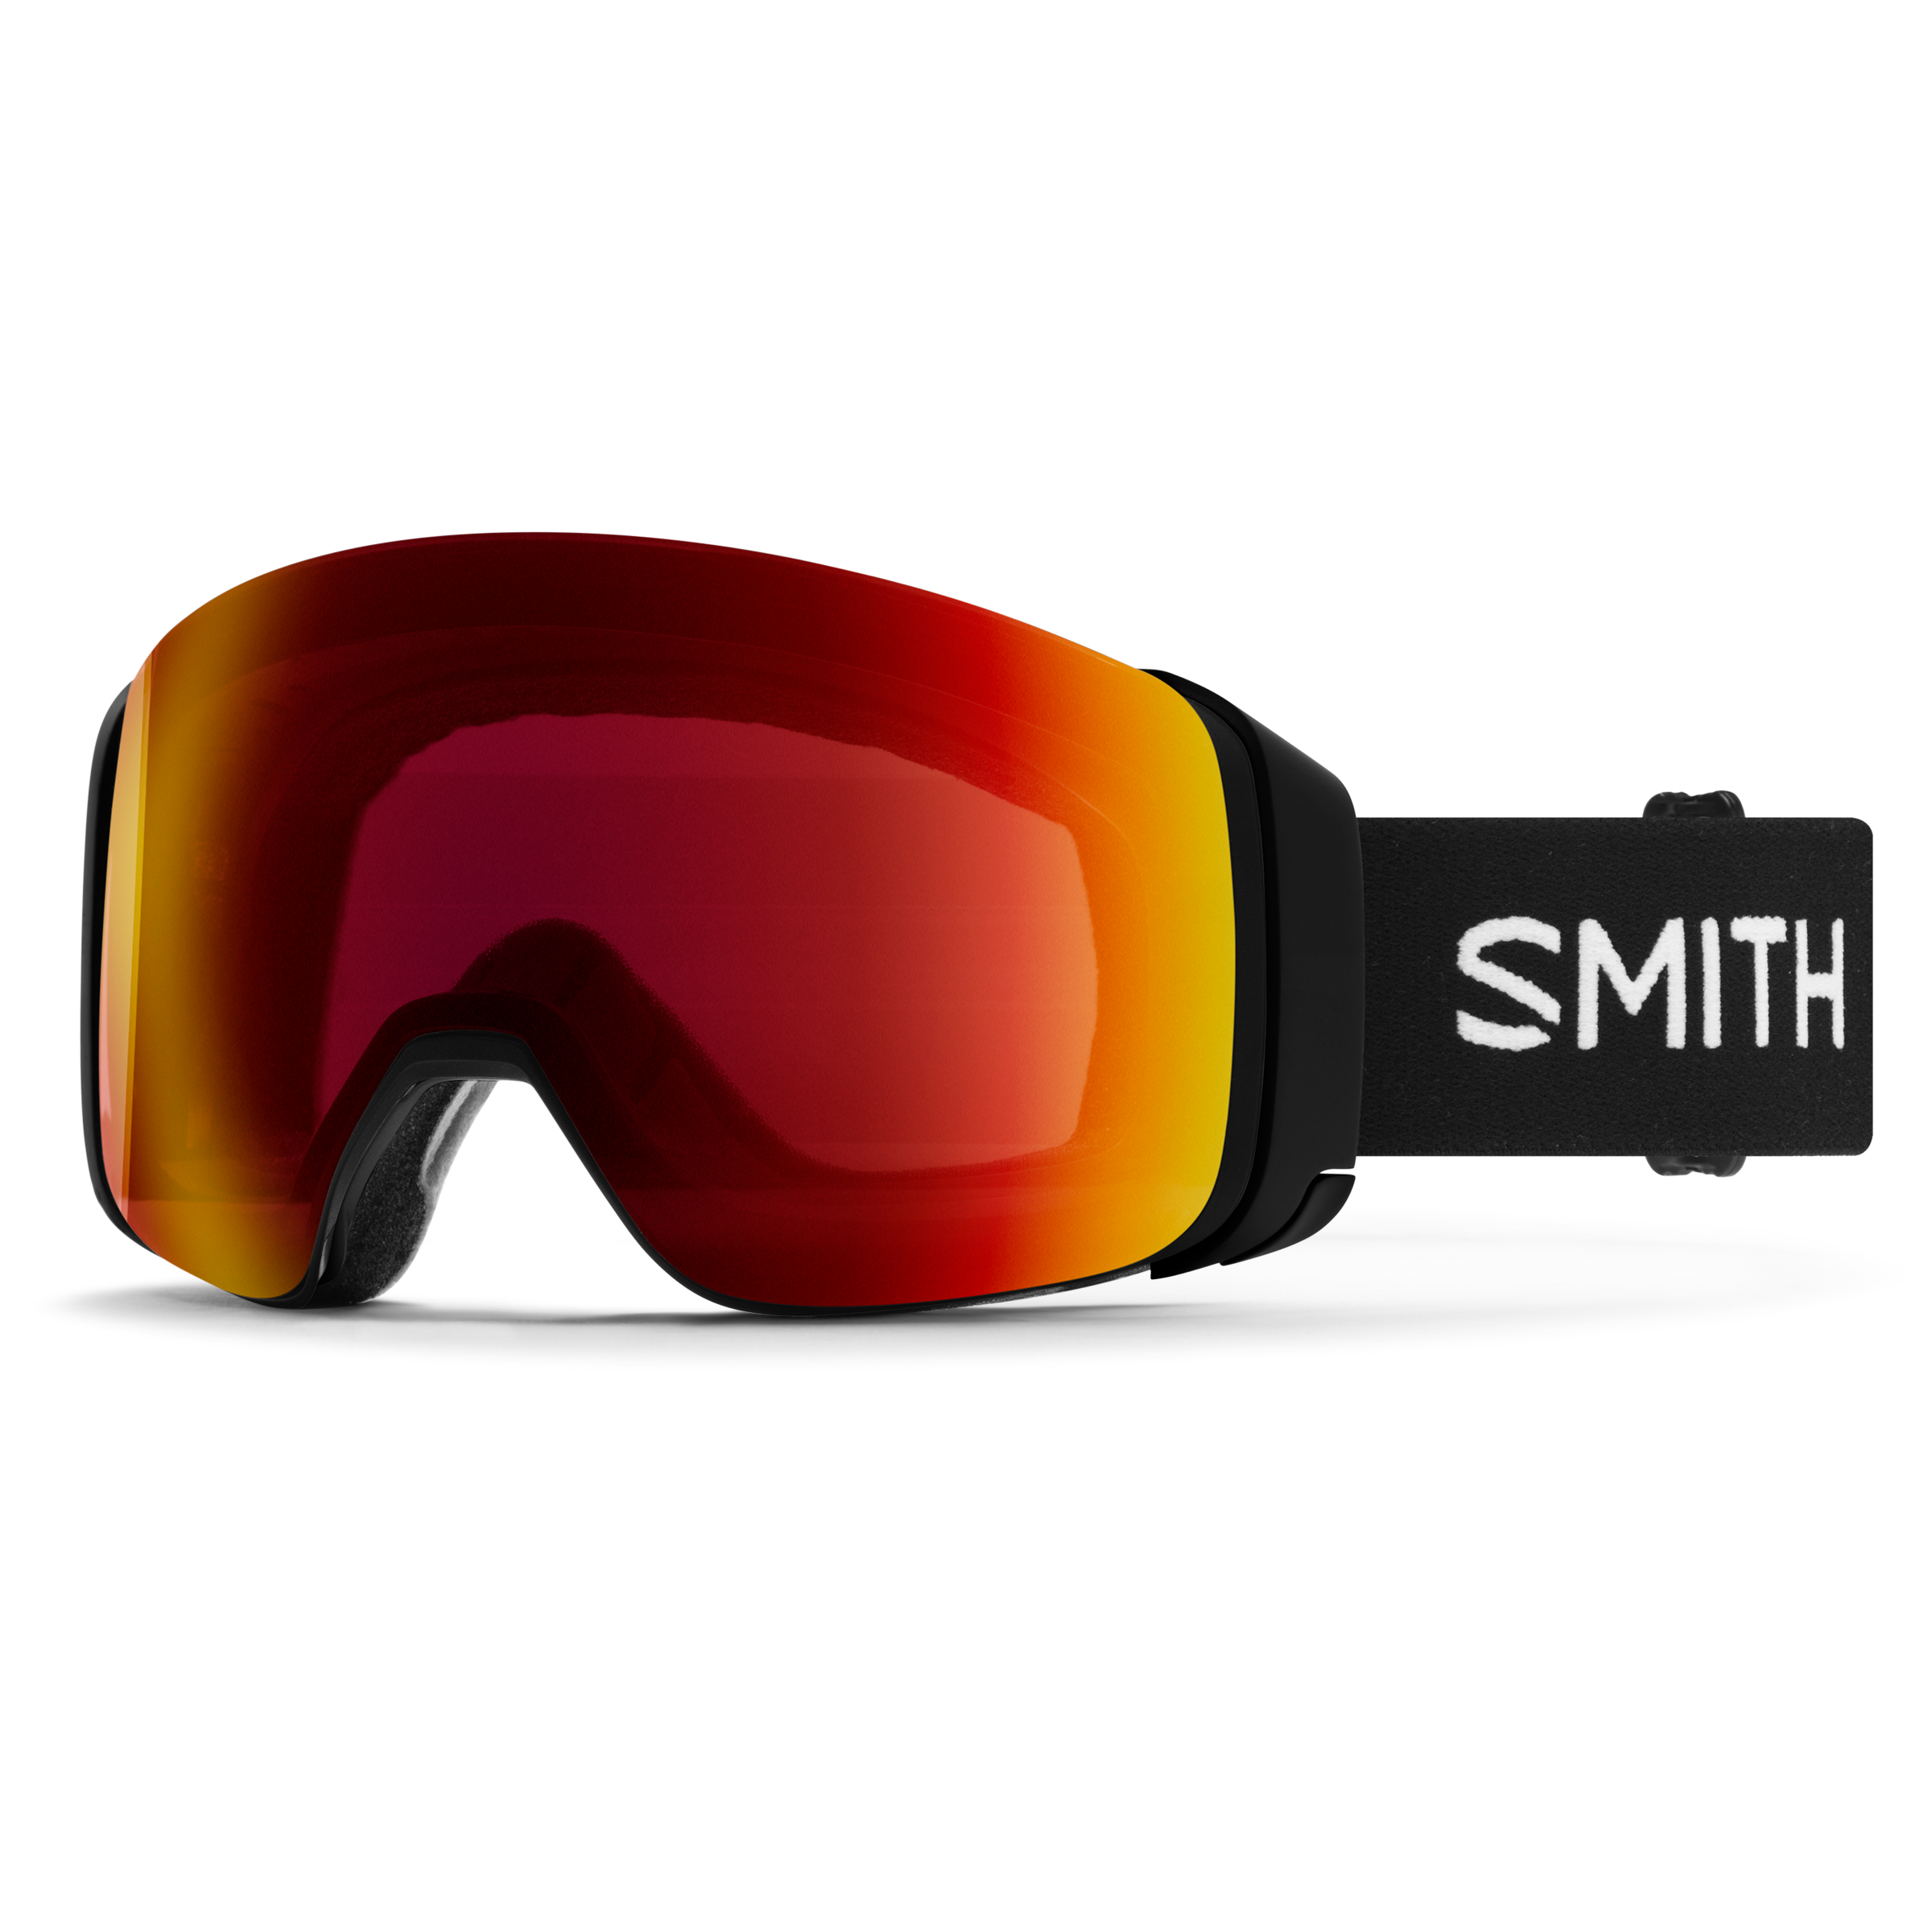 Buy 4D starting MAG USD | Smith 340.00 at Optics